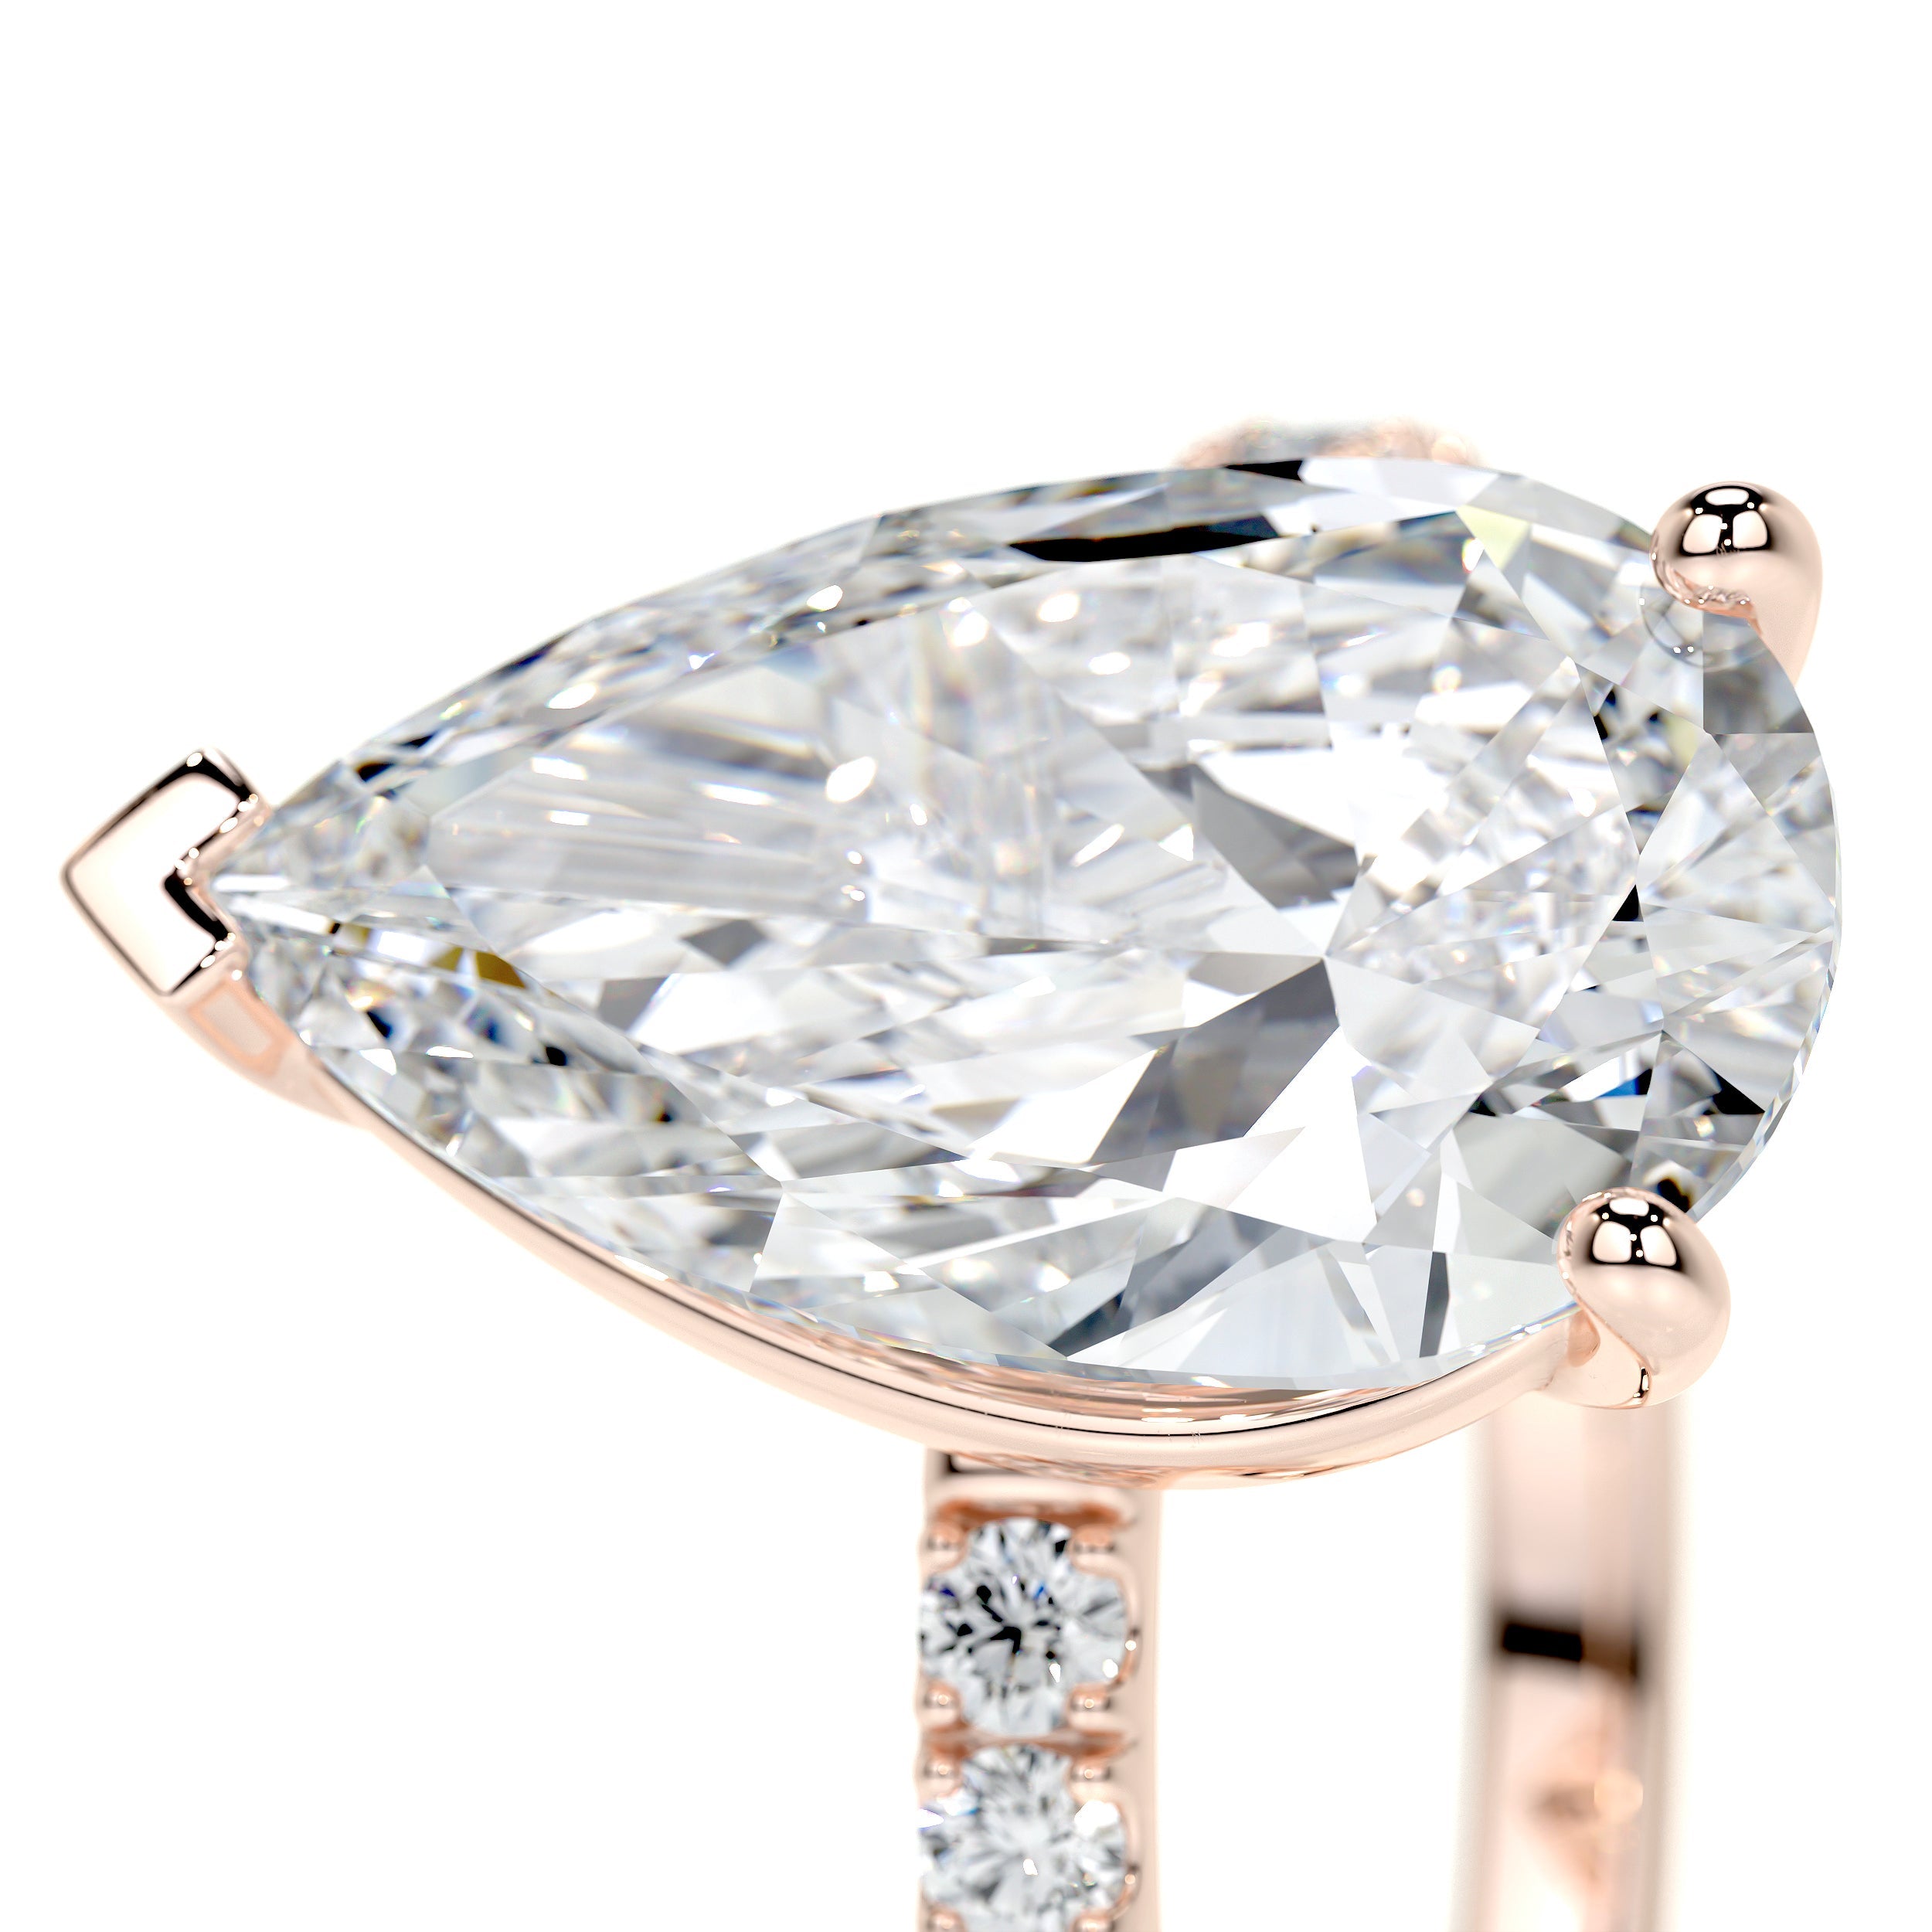 Jenny Lab Grown Diamond Ring   (5.5 Carat) -14K Rose Gold